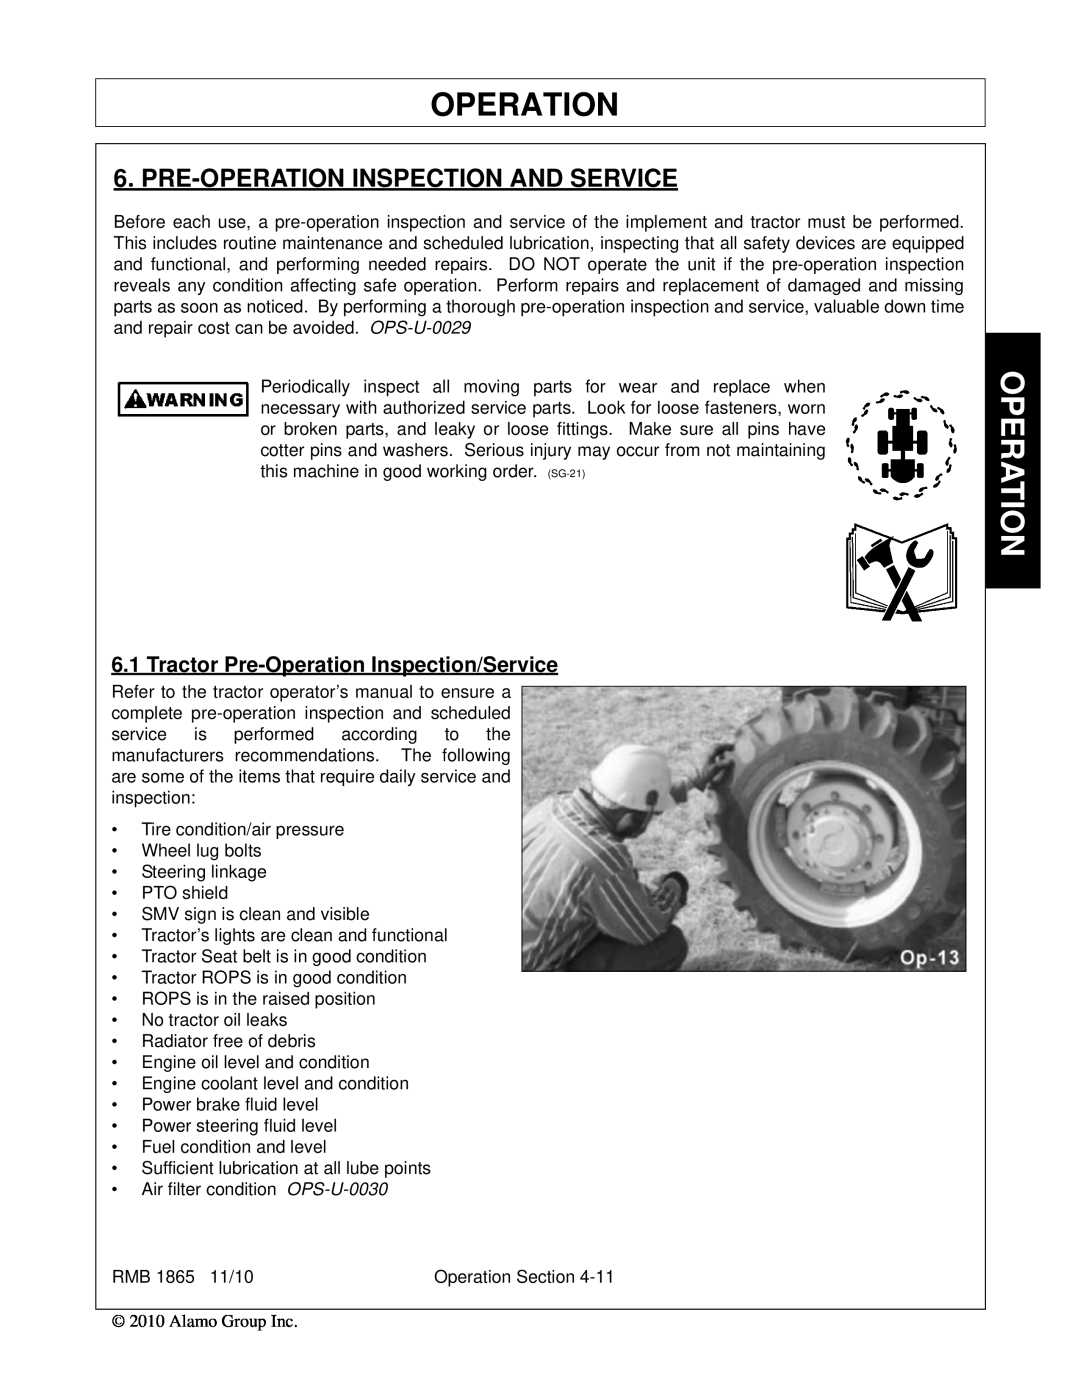 Bush Hog RMB 1865 manual Pre-Operation Inspection And Service, Tractor Pre-Operation Inspection/Service 